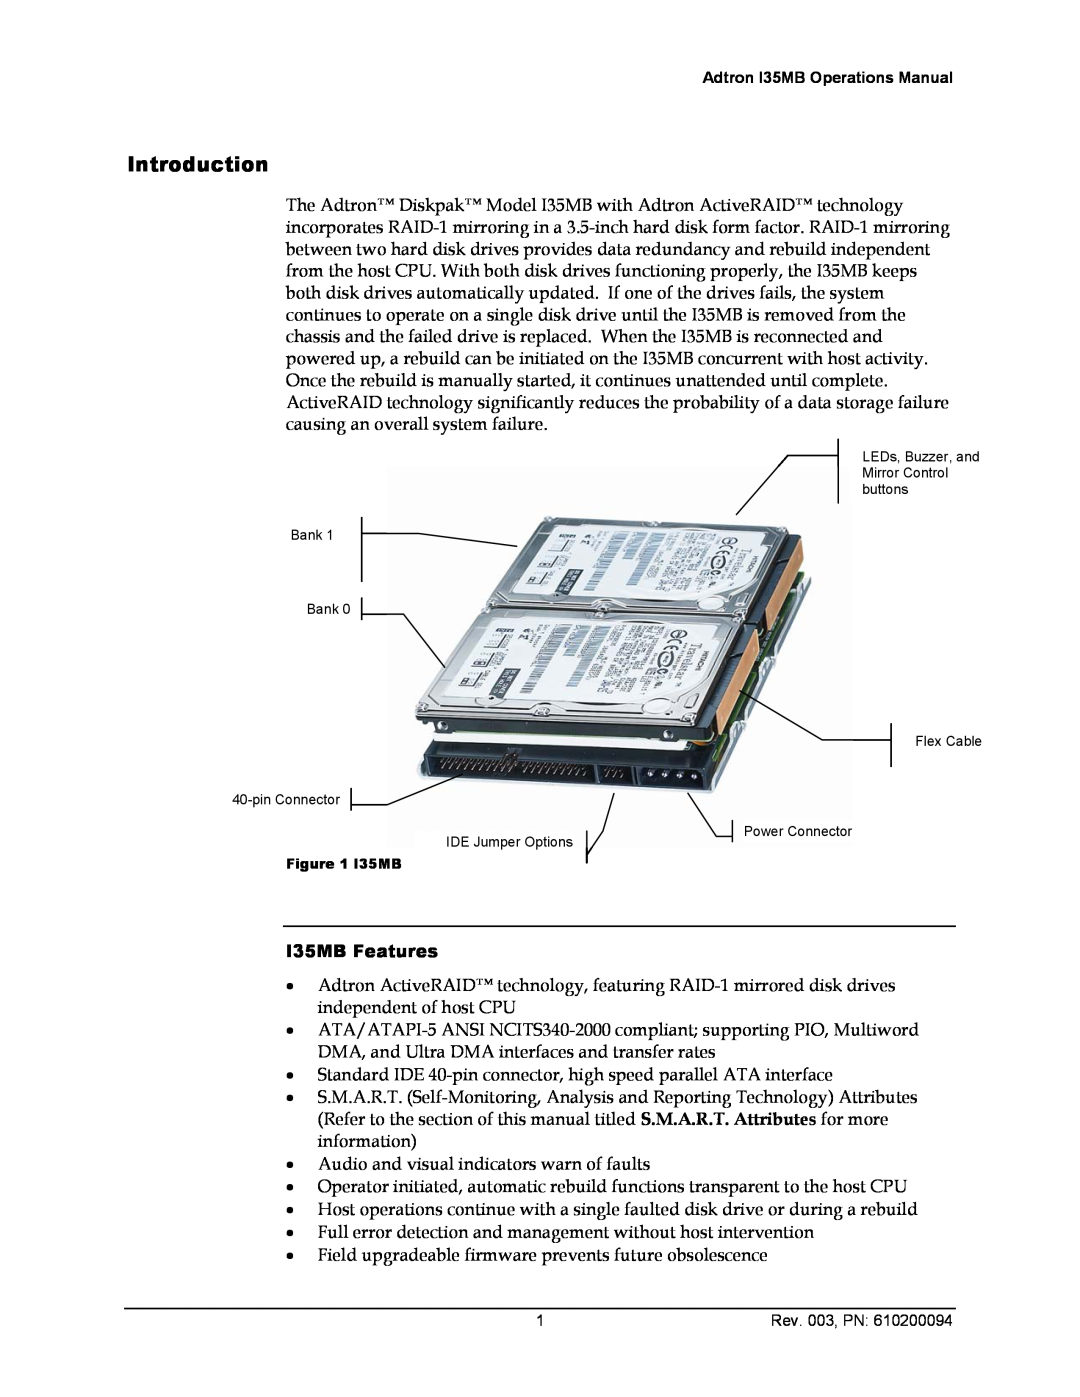 ADTRAN 610200094 manual Introduction, I35MB Features 